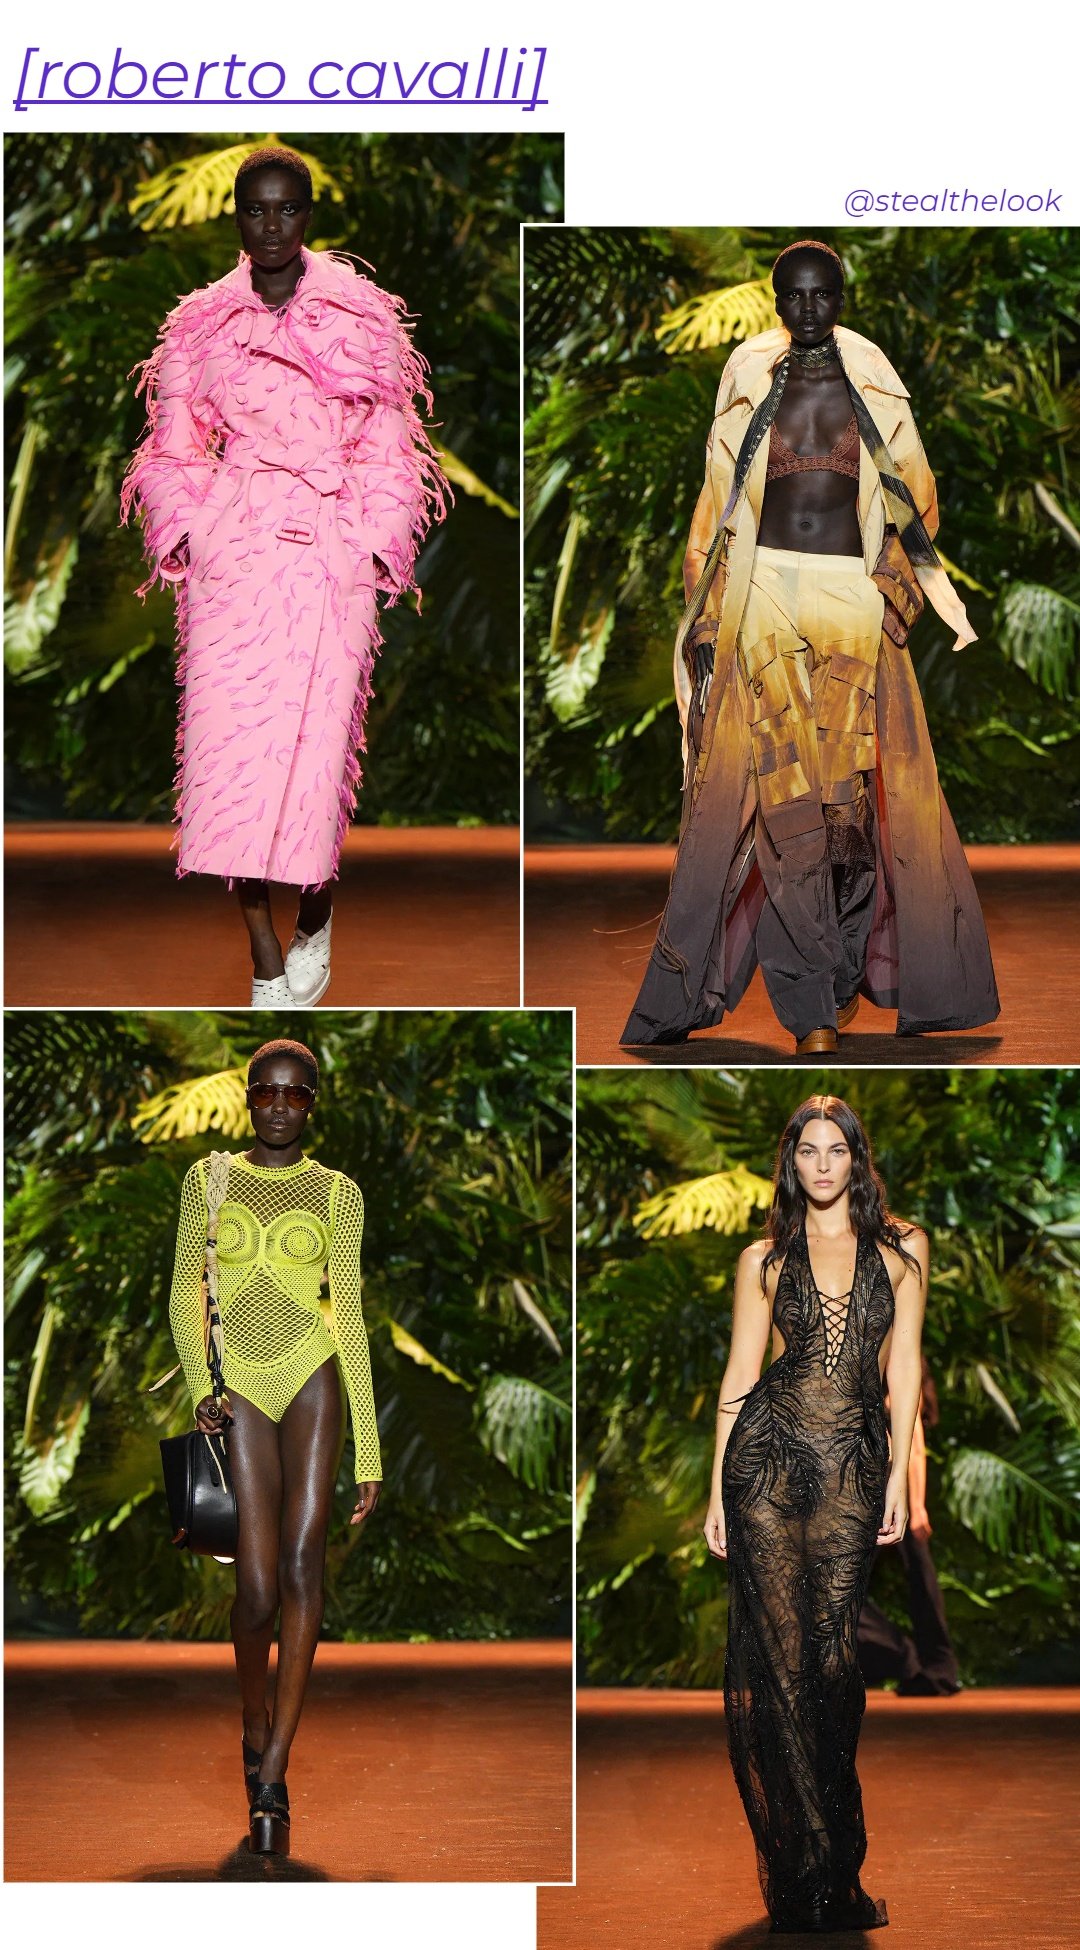 Roberto Cavalli - roupas diversas - Milano Fashion Week - primavera - colagem de imagens - https://stealthelook.com.br